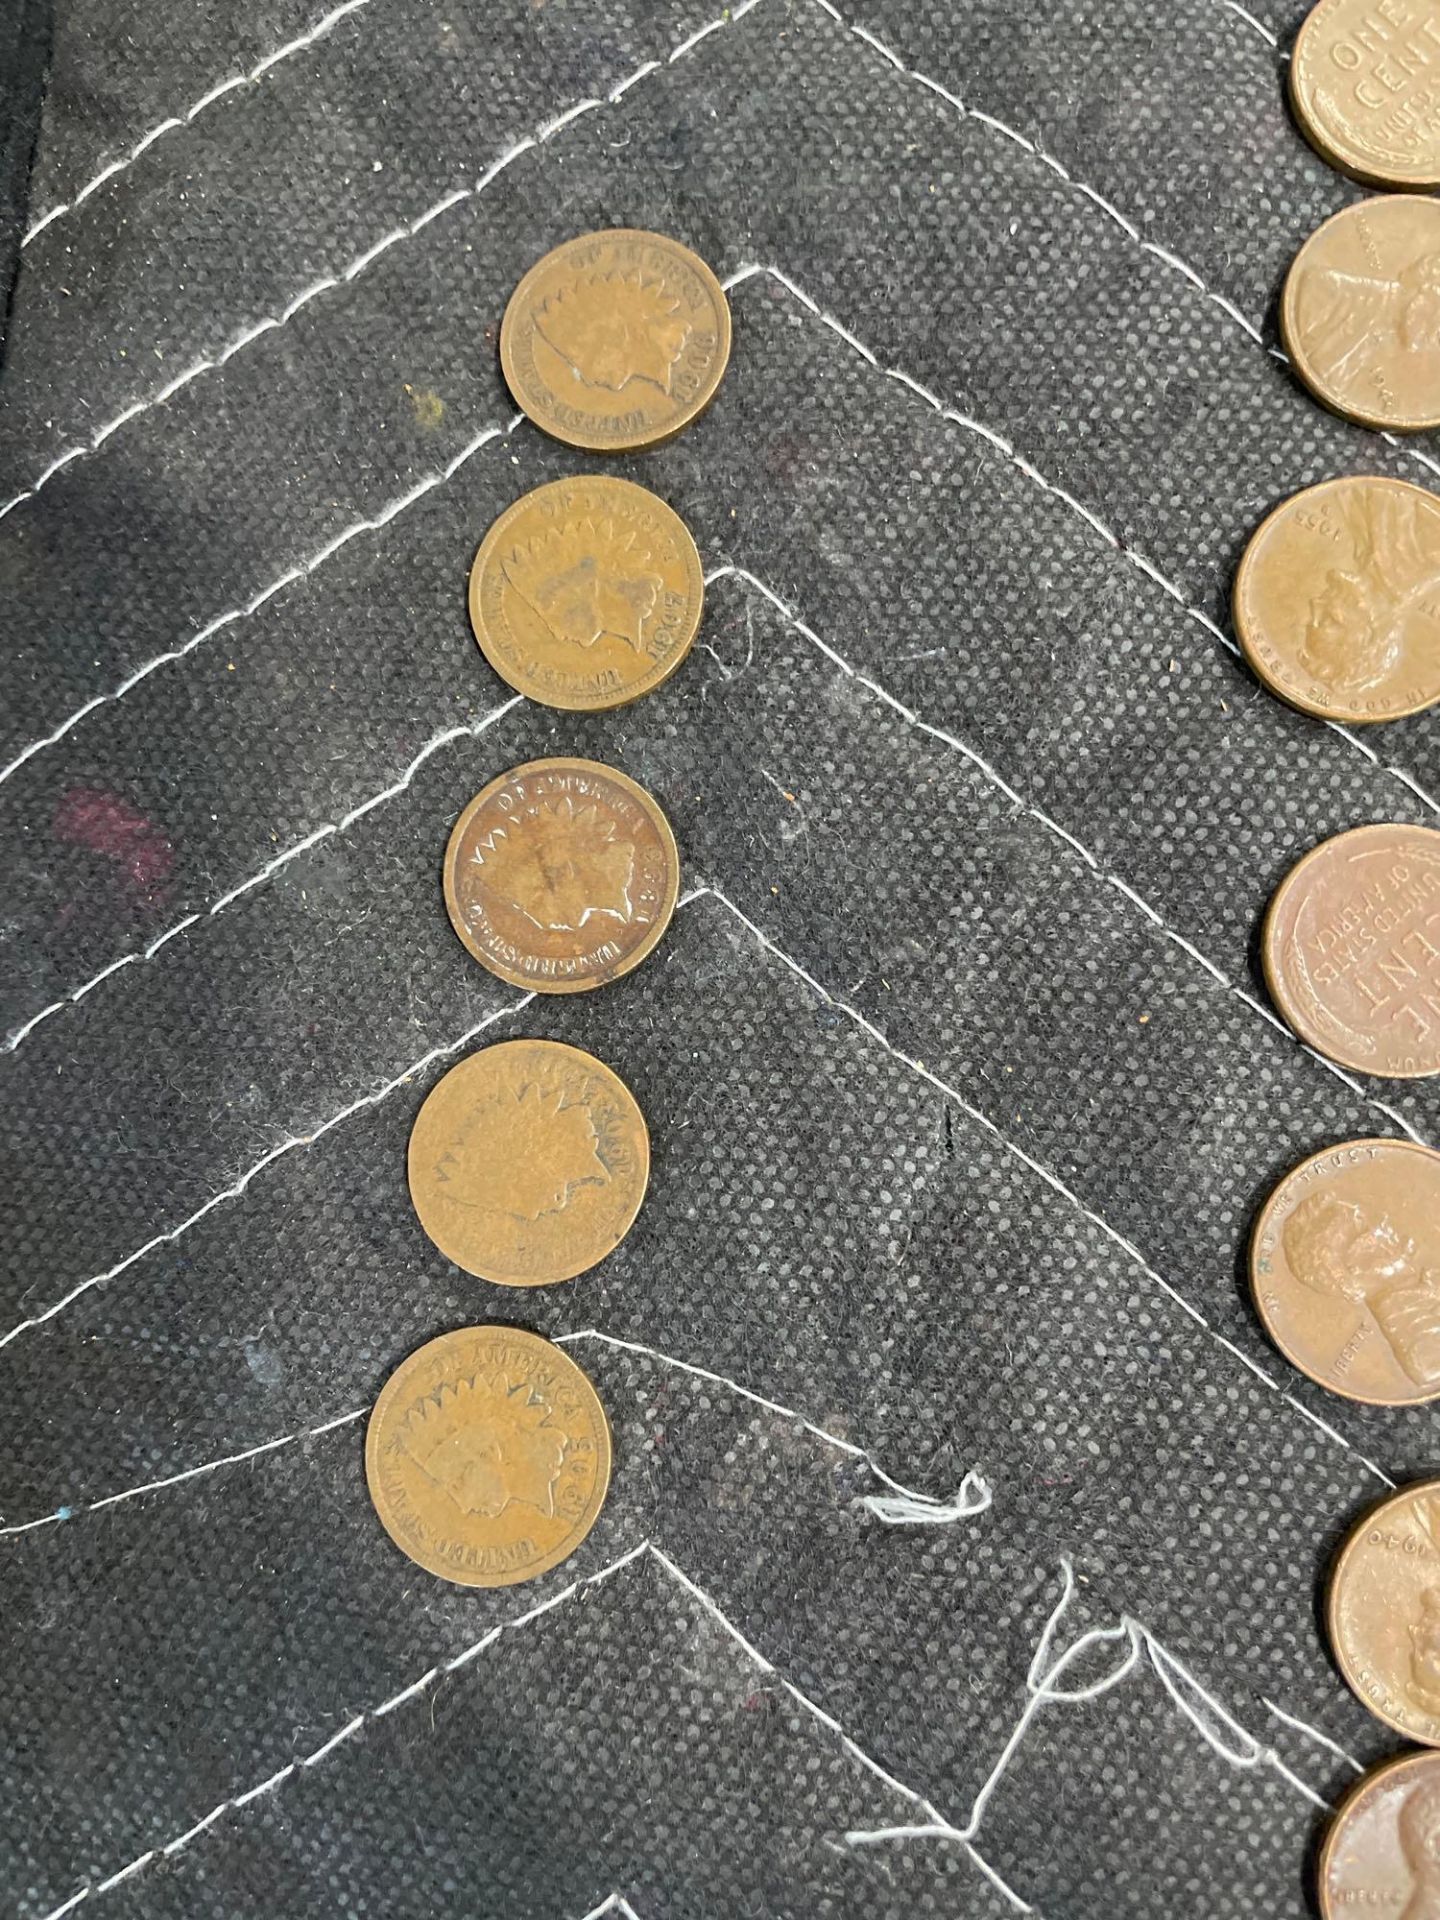 Buffalo Nickels /Wheat Pennies - Image 4 of 5